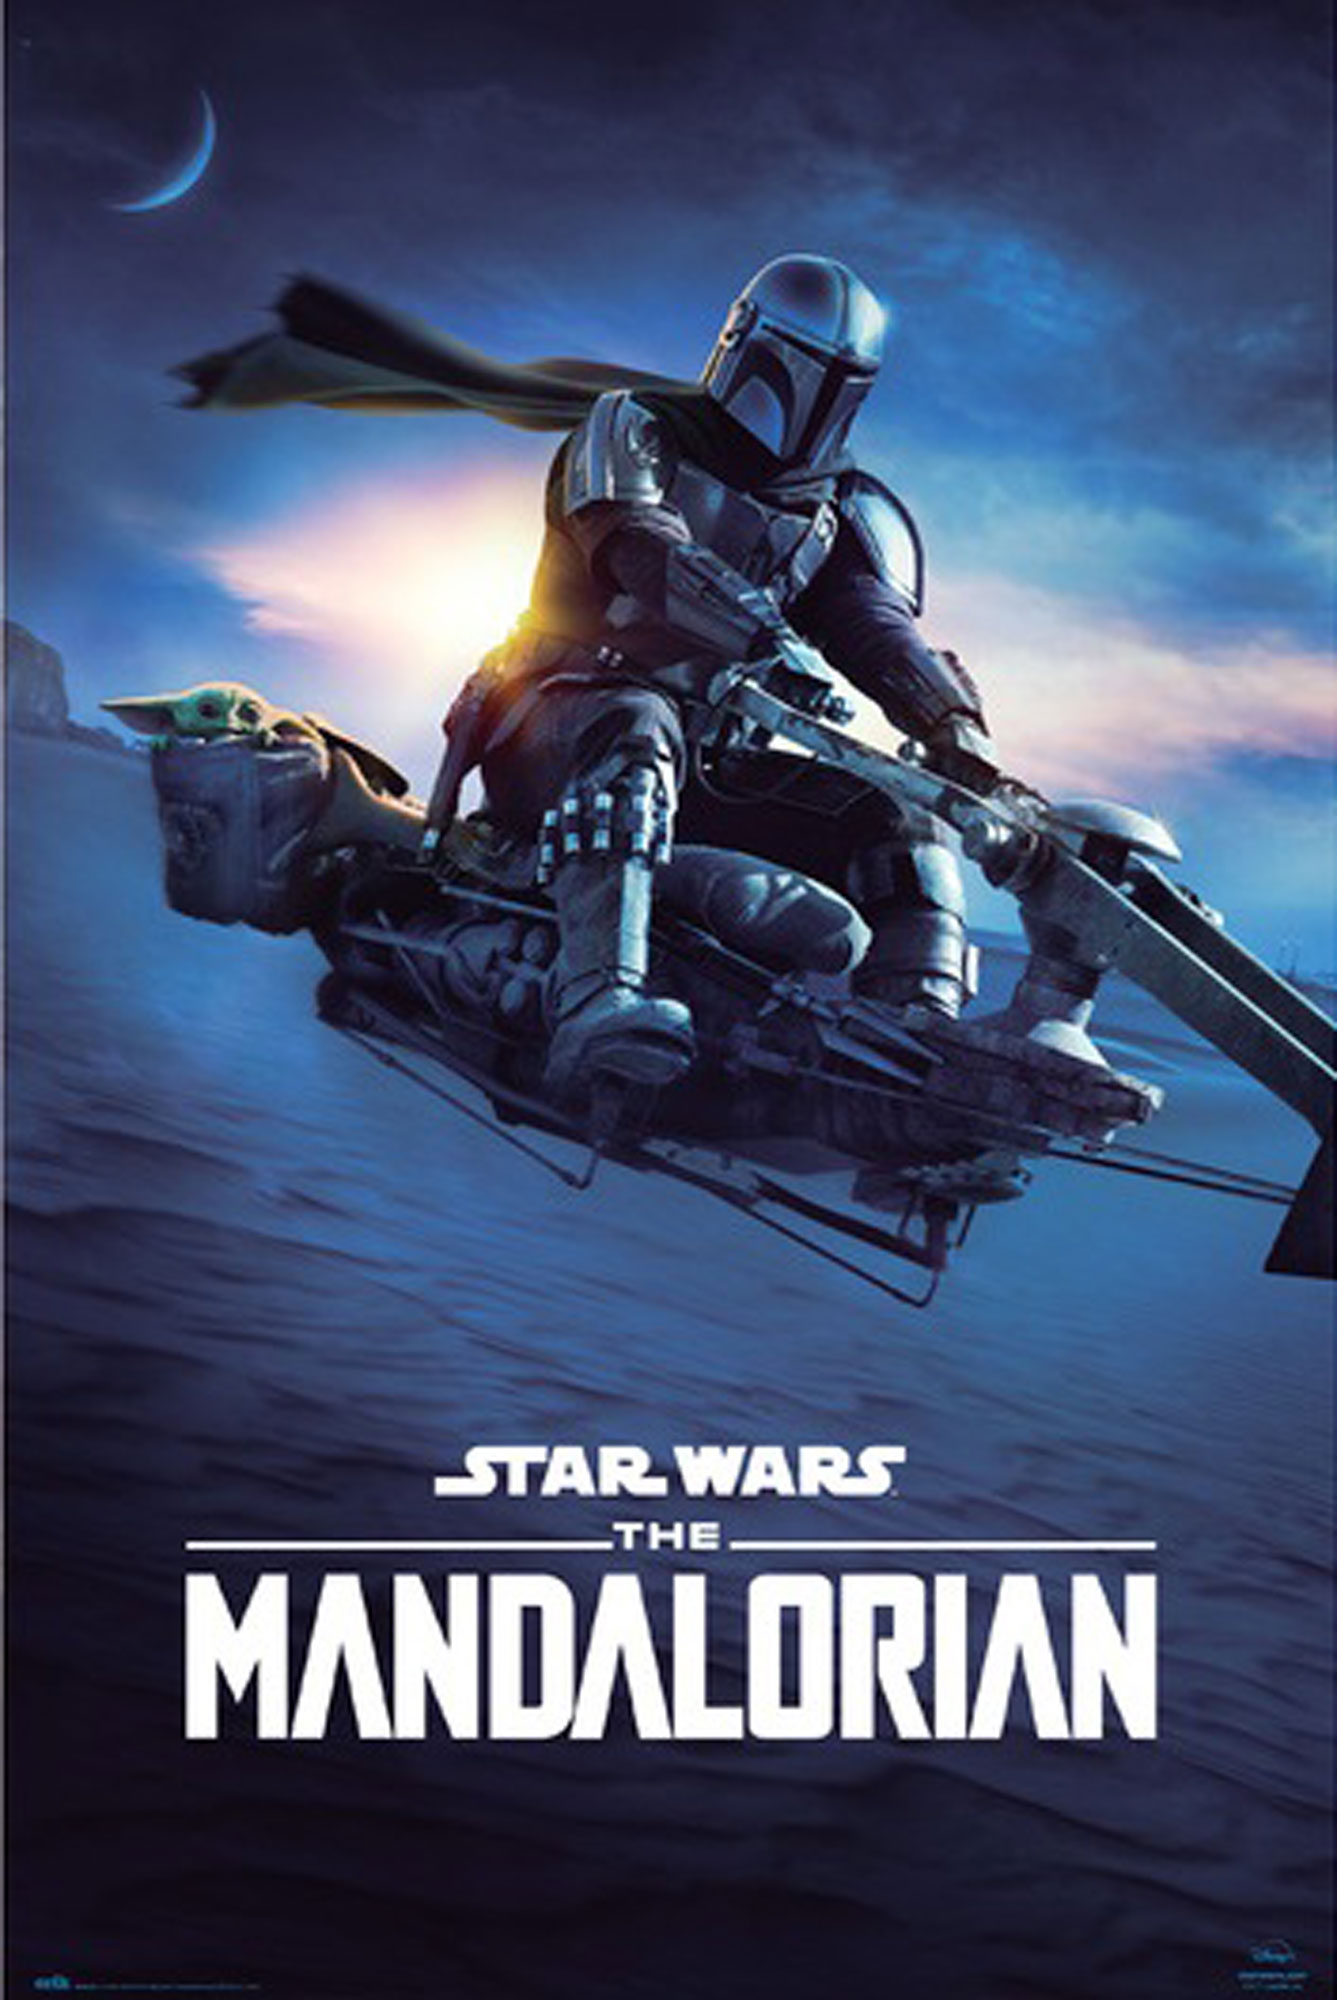 Wars - Mandalorian Speeder - The 2 Star Bike